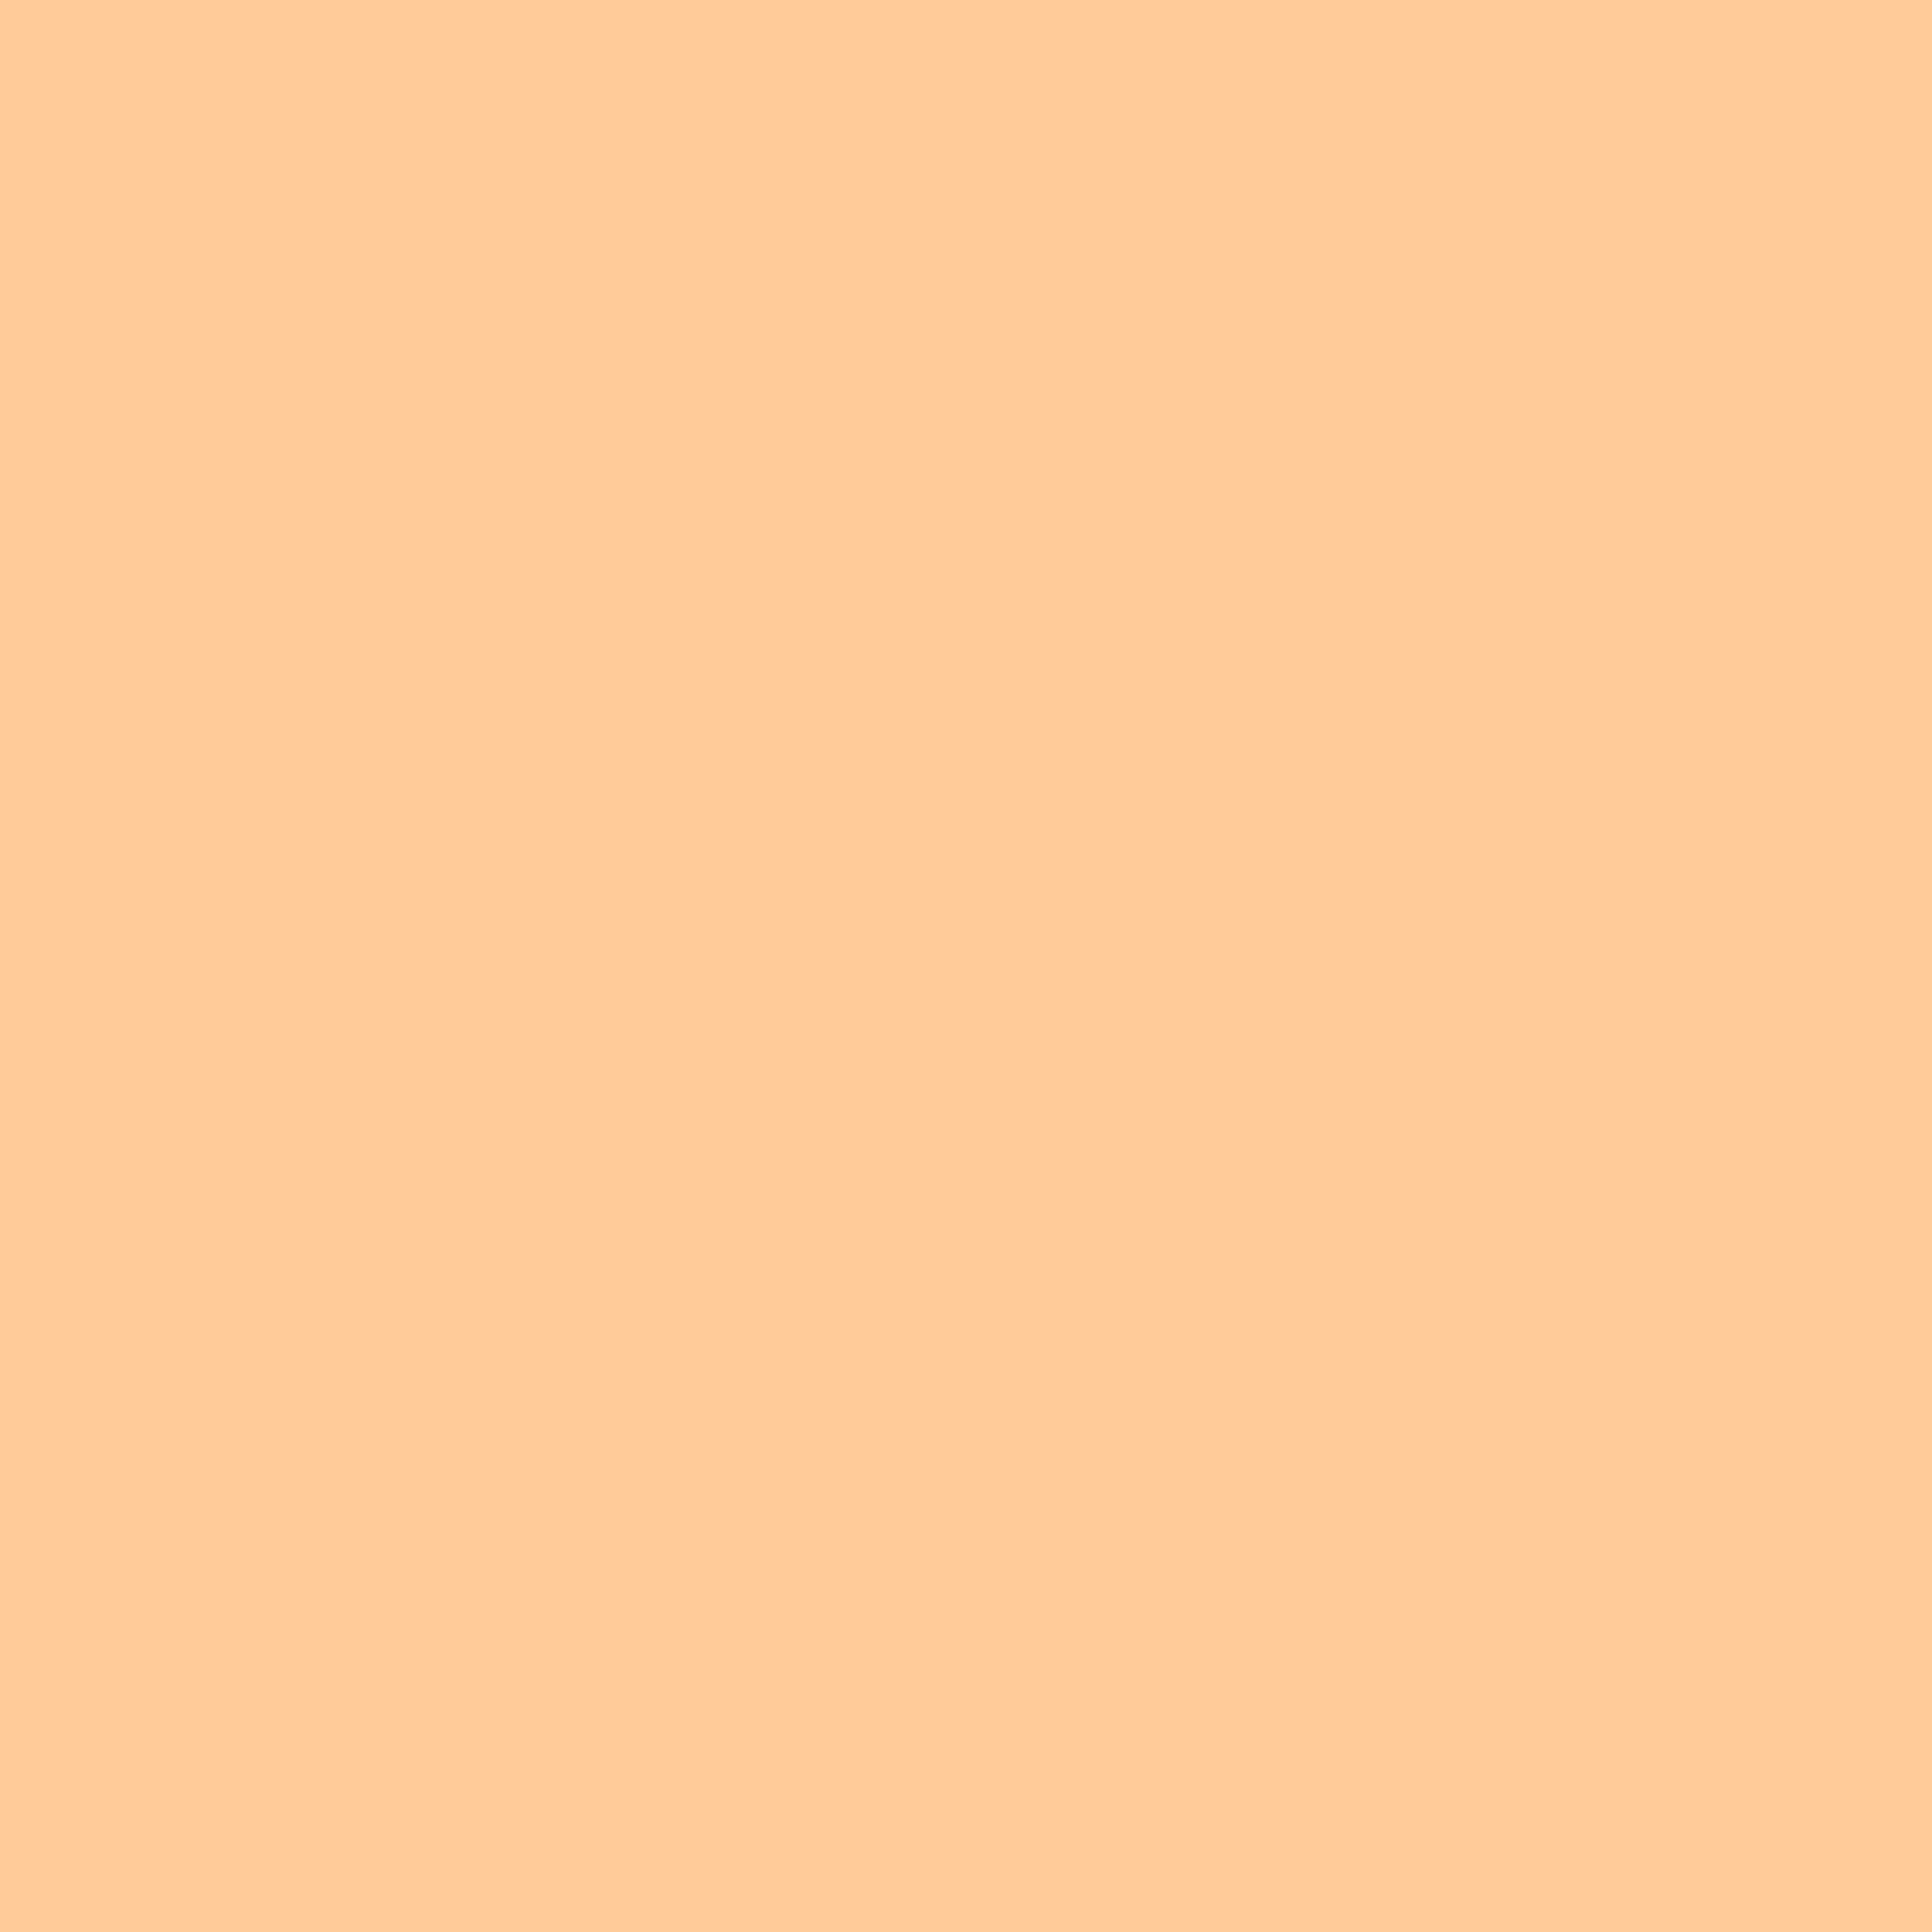 3600x3600 Peach-orange Solid Color Background